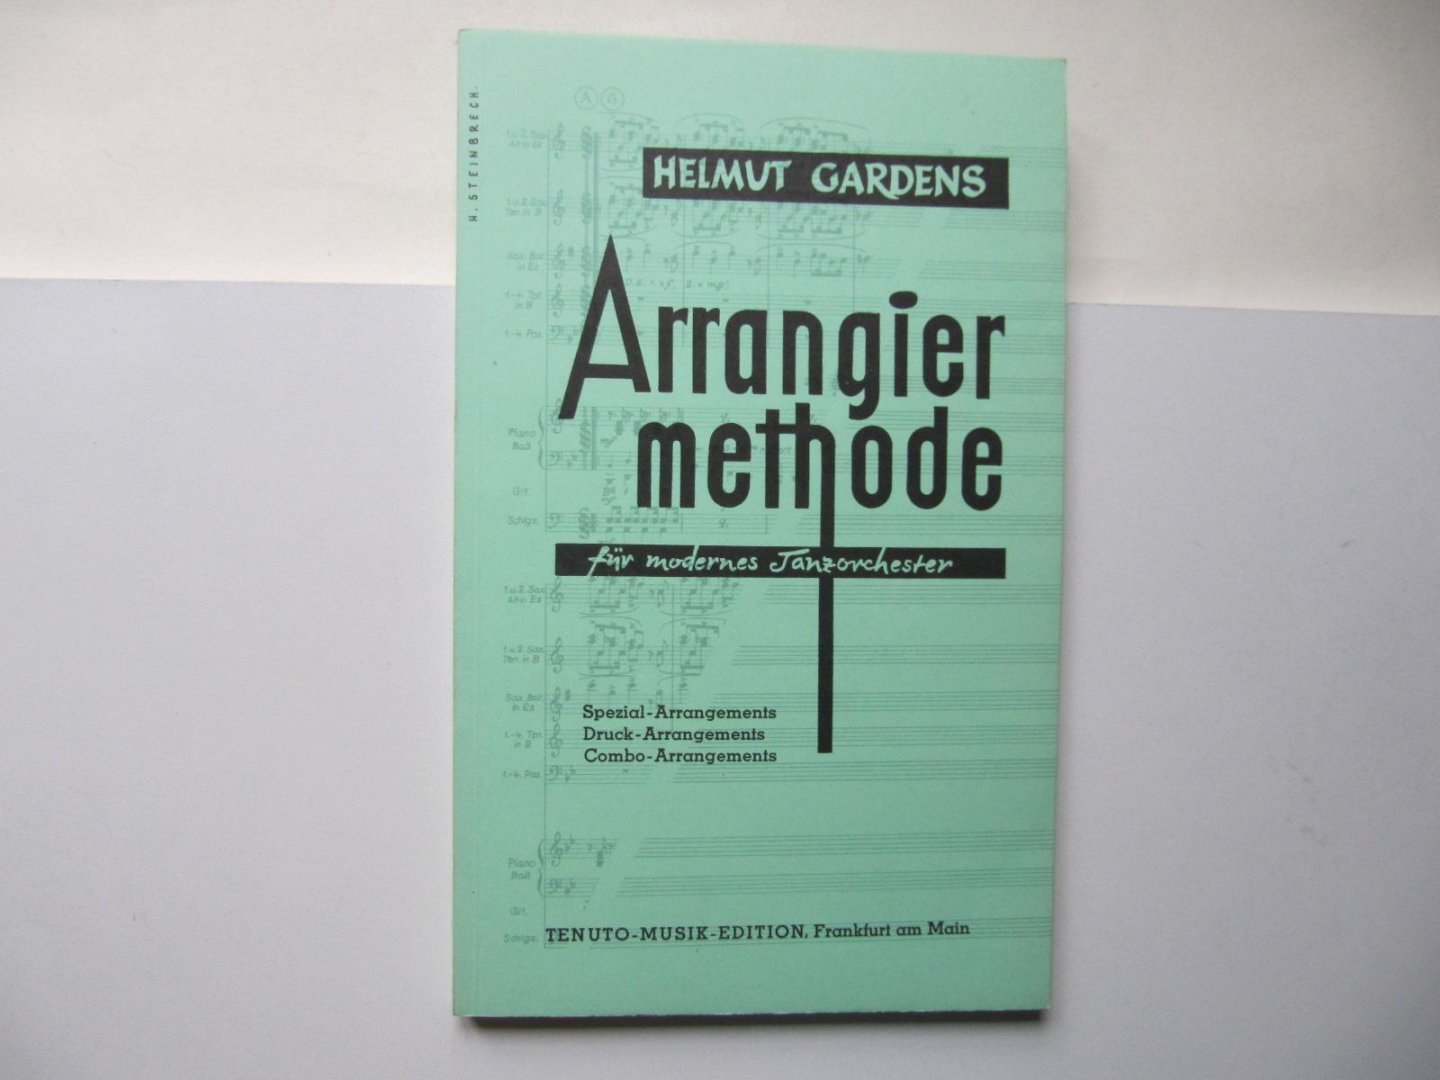 Helmut Gardens - Arrangier Methode fur modernes Tanzorchester